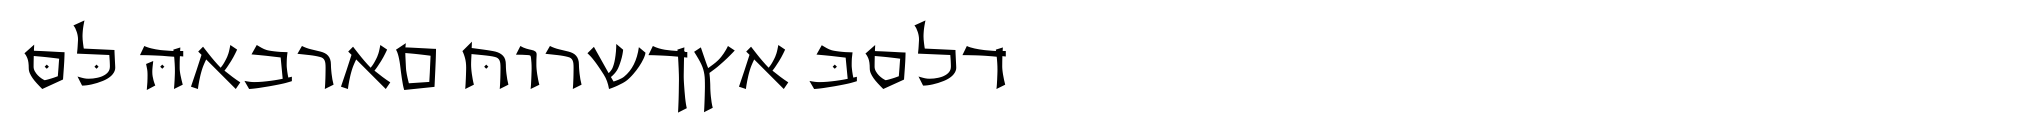 OL Hebrew Cursive Bold image